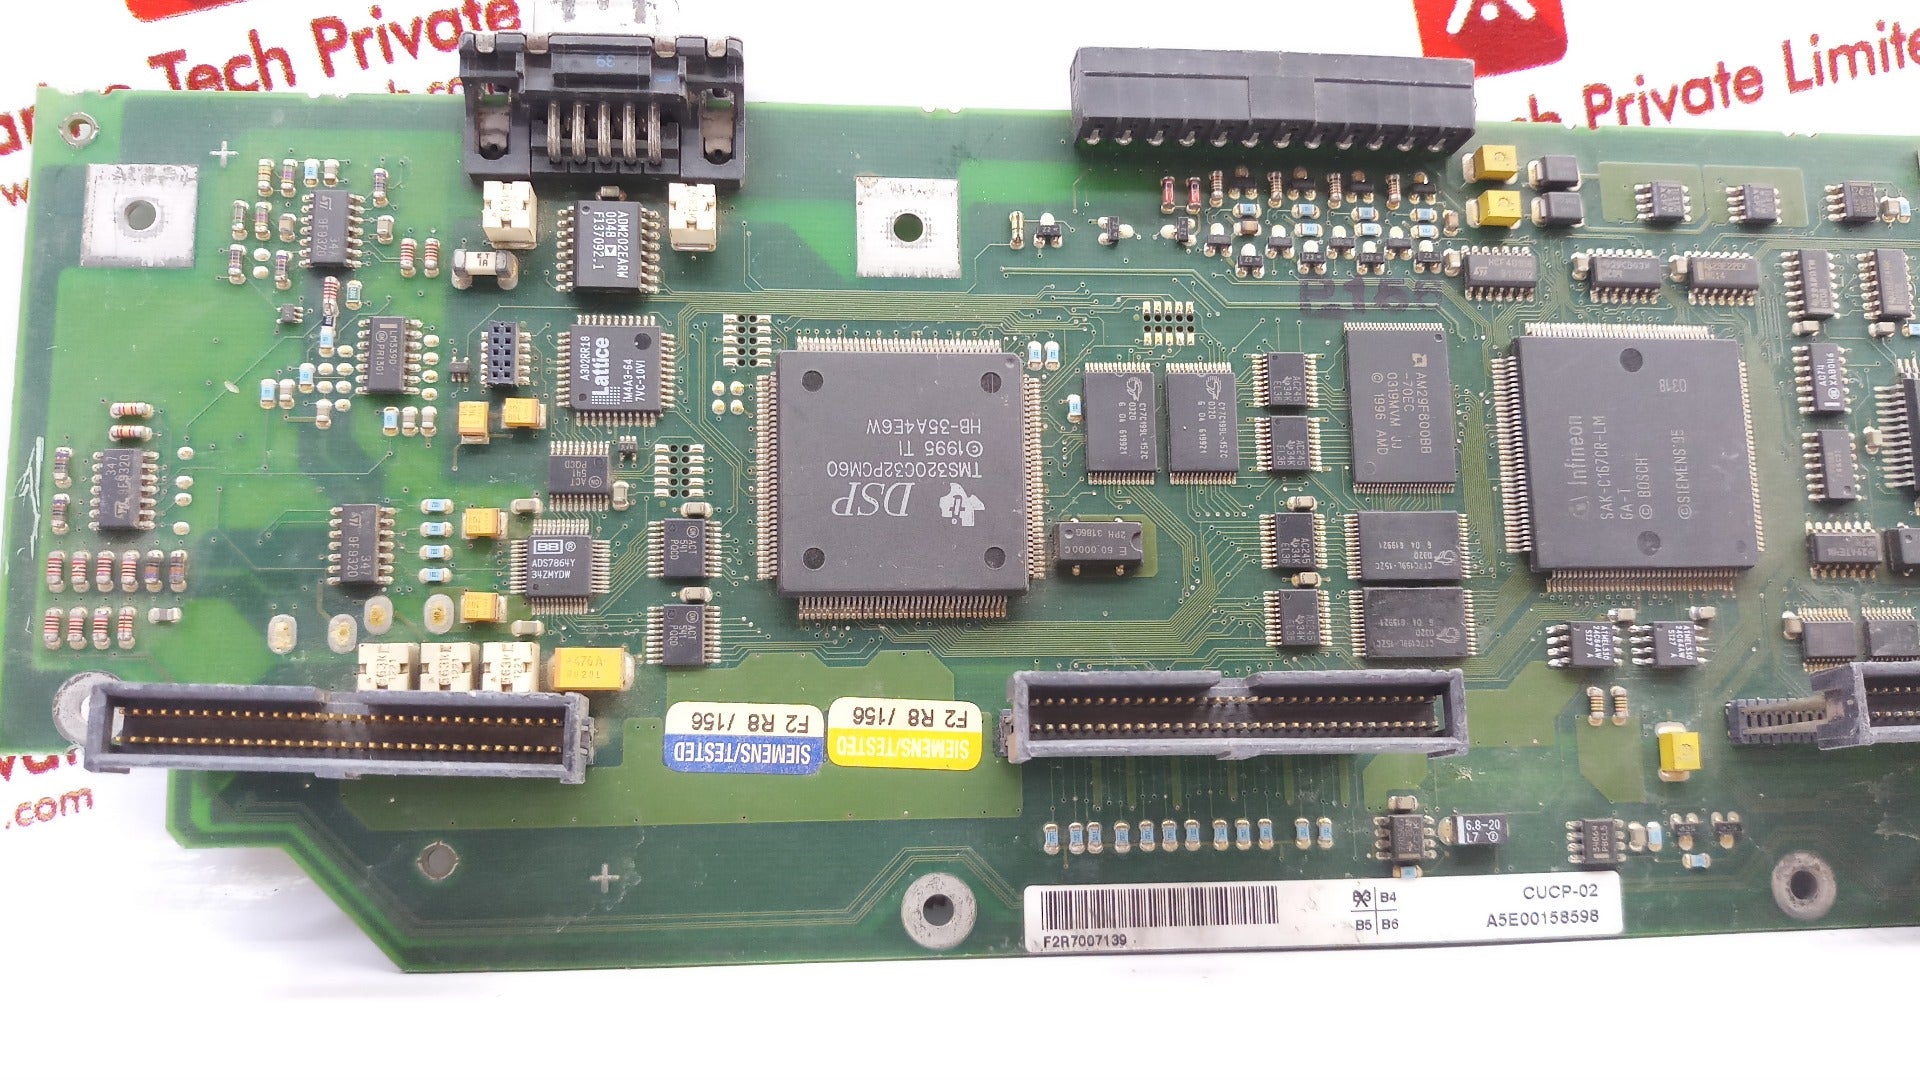 Siemens cucp-02 a5e00158598 motherboard